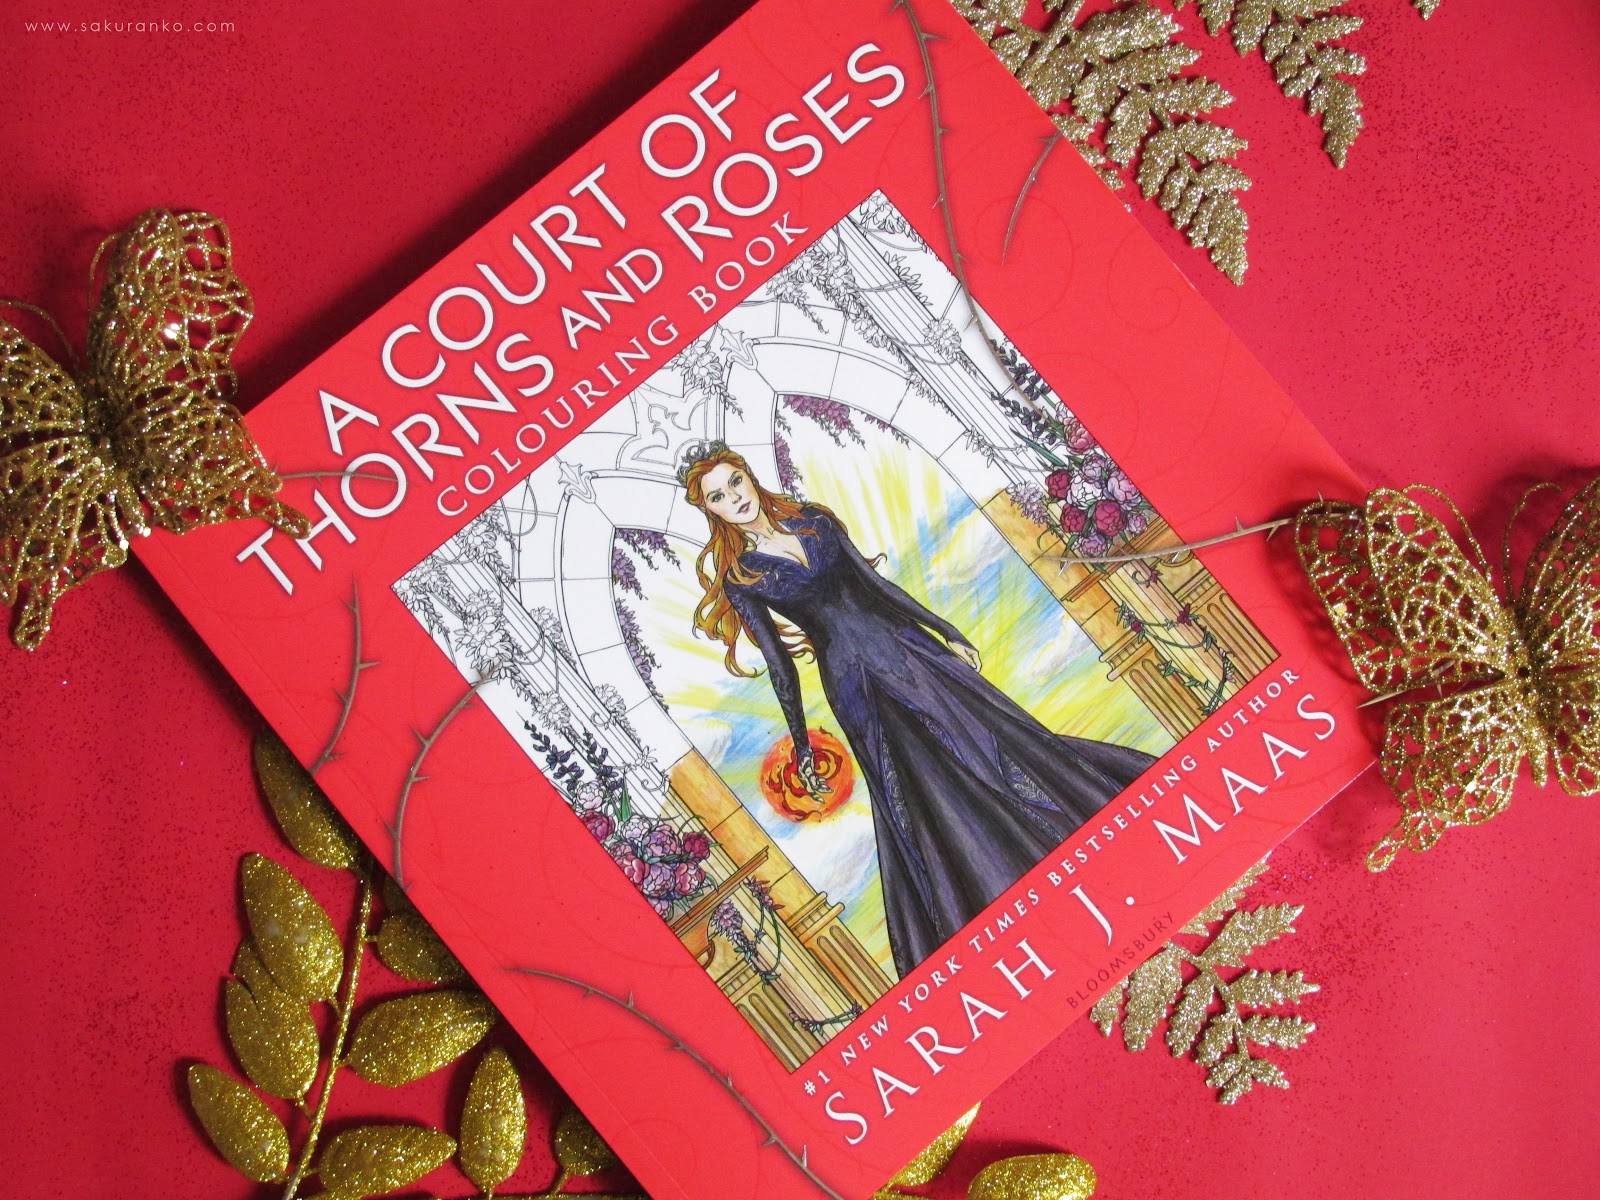 Sakuranko: A Court of Thorns and Roses Coloring Book by Sarah J. Maas